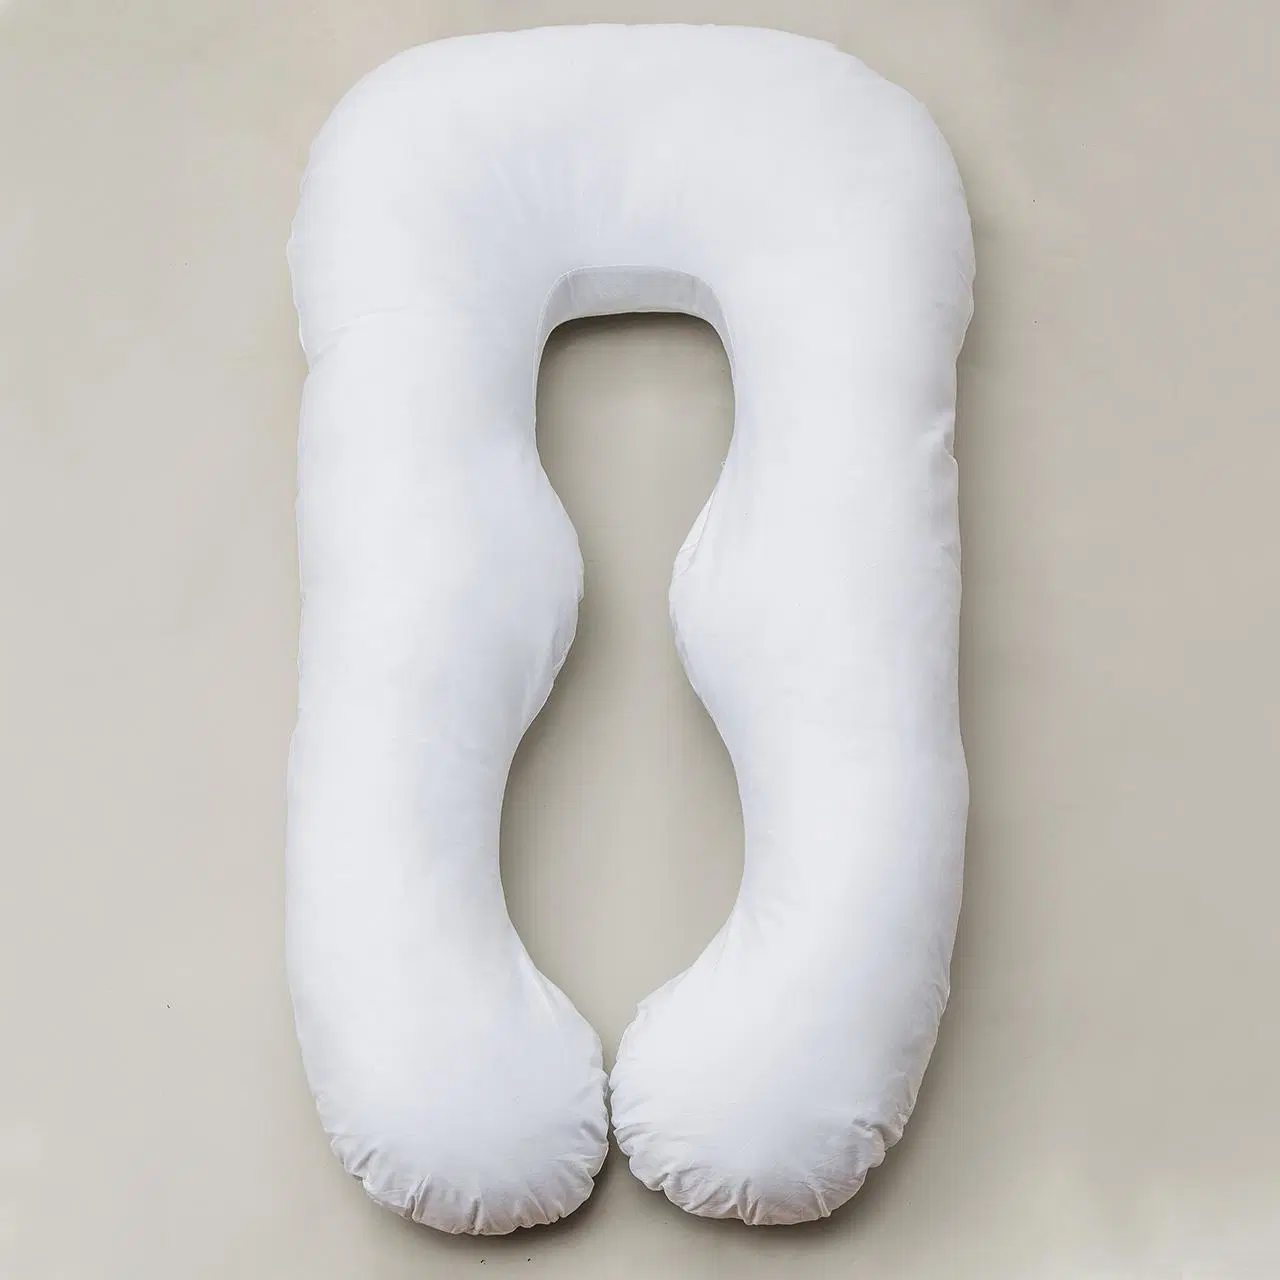 Fashion U-Shape Pregnancy Pillow for Sleeping